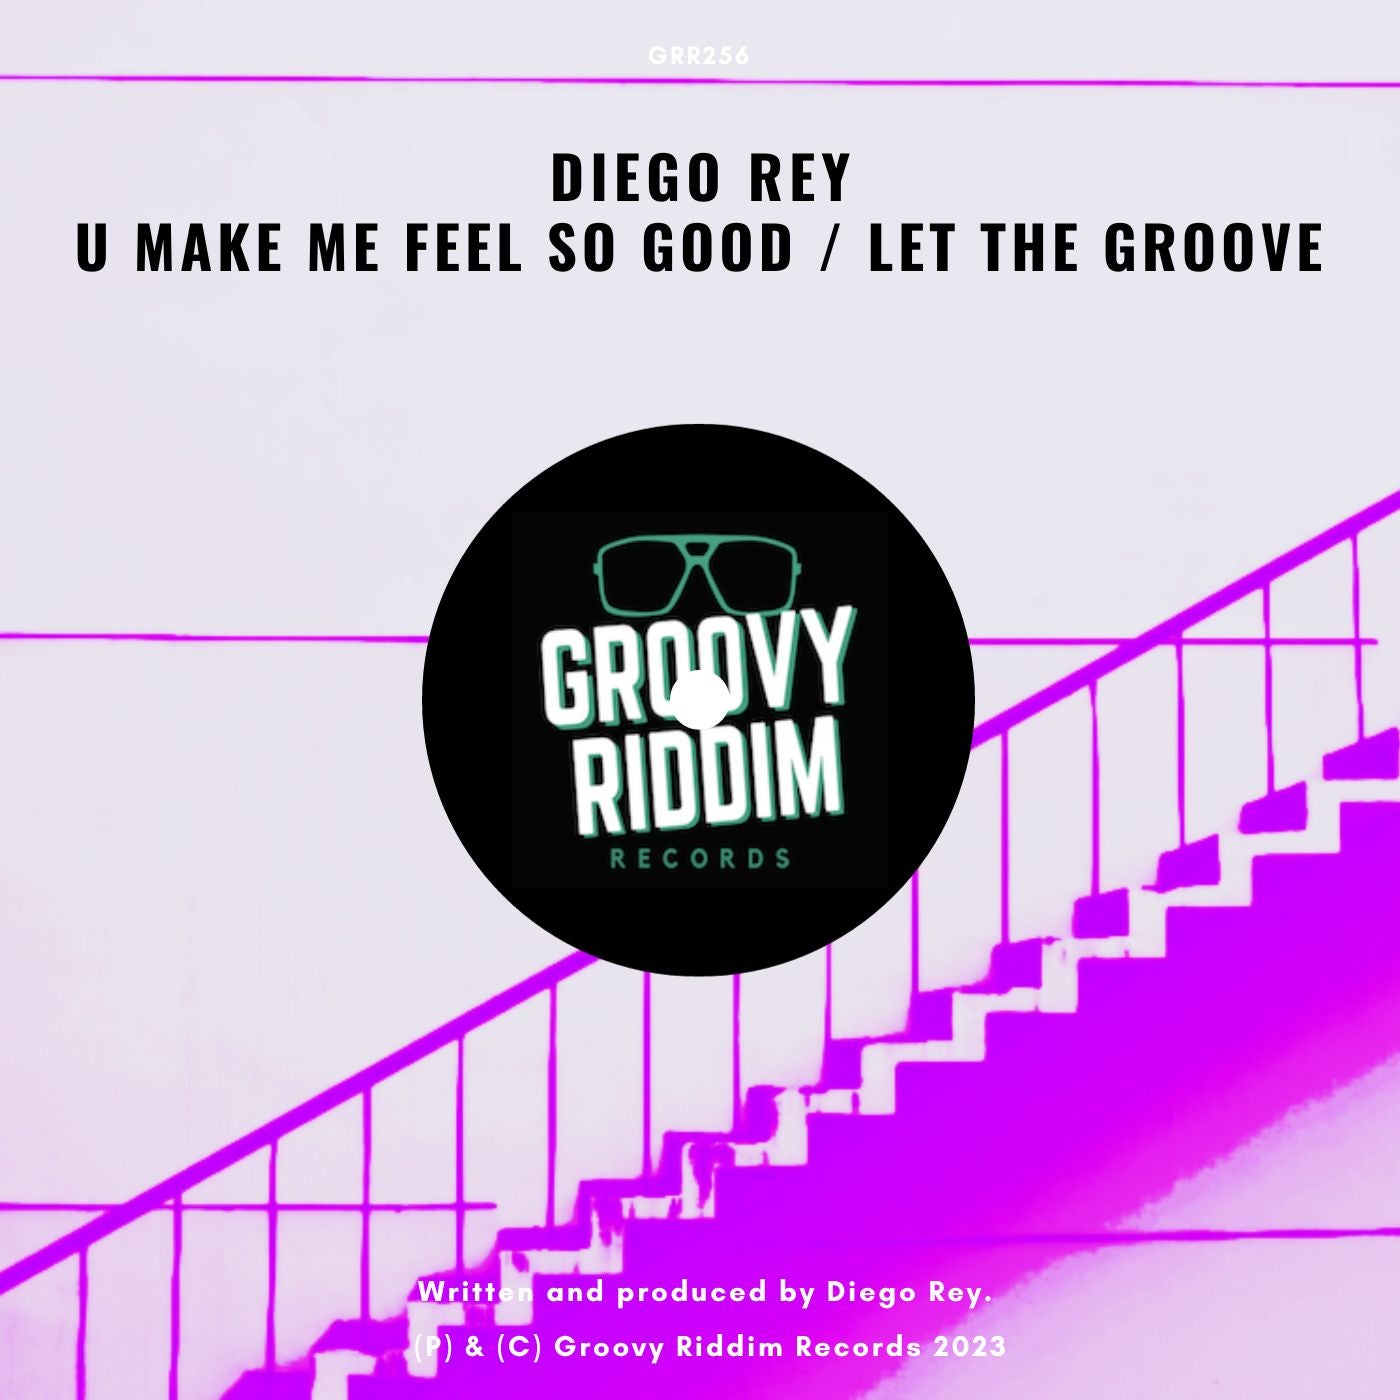 U Make Me Feel So Good / Let The Groove